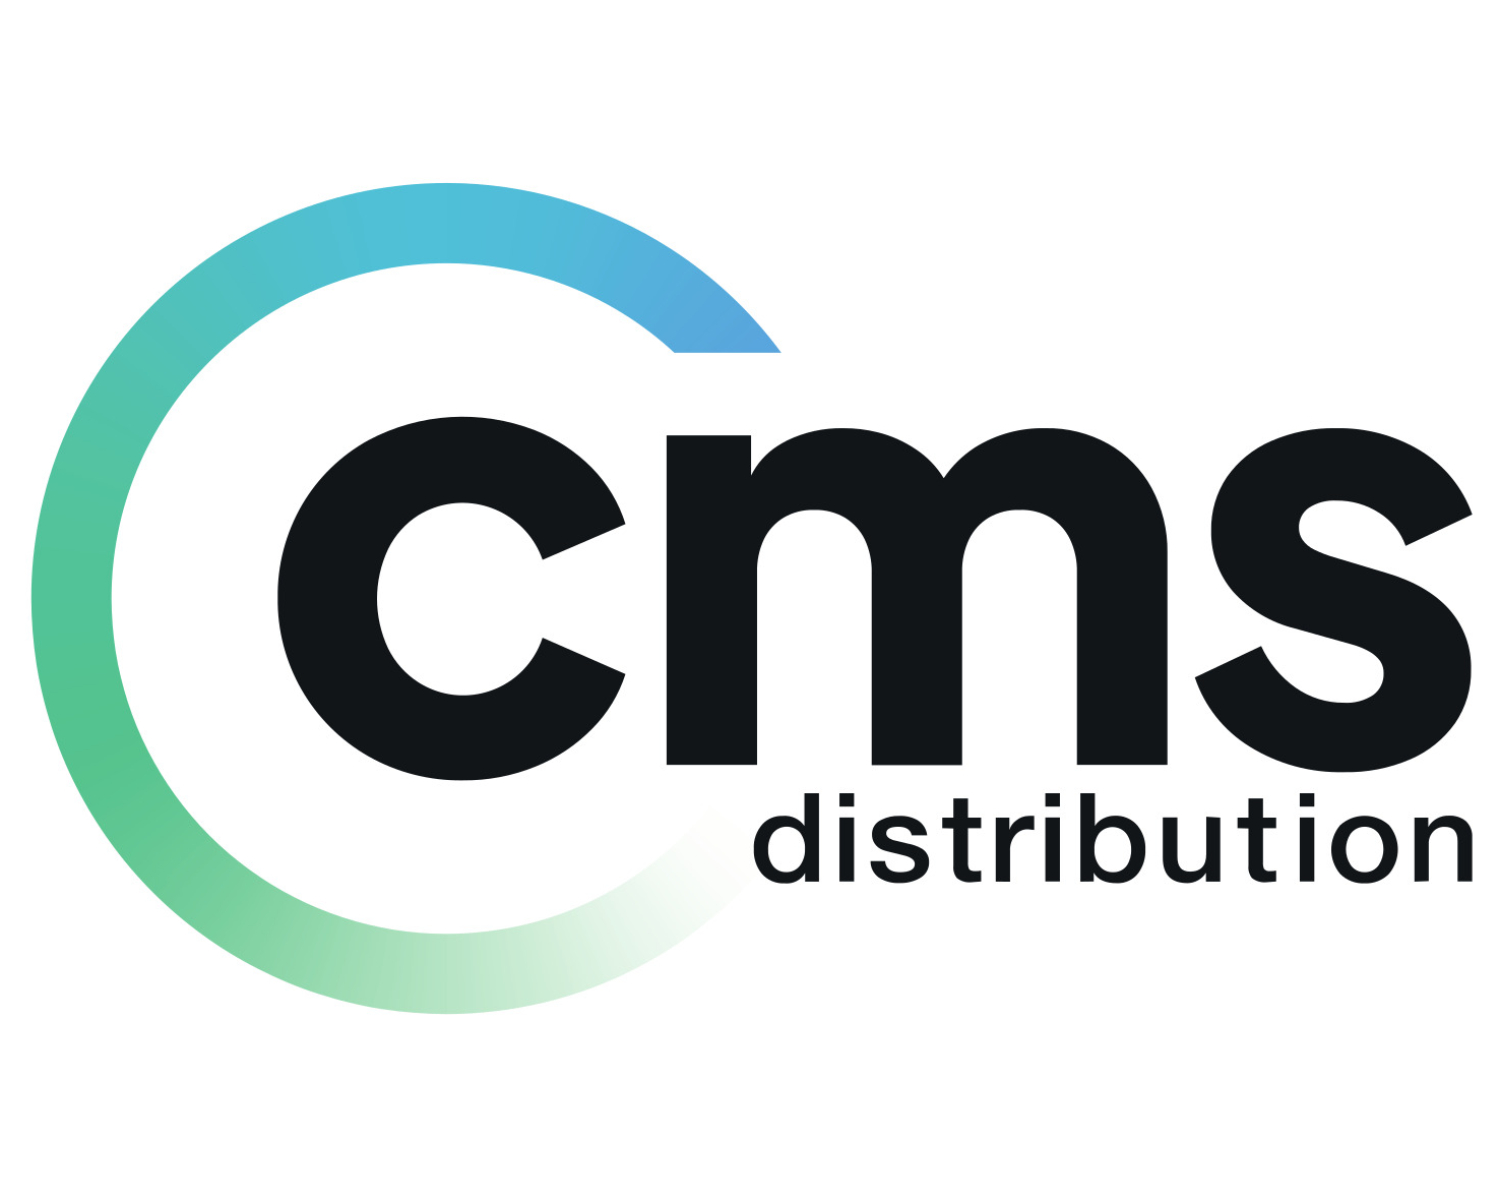 CMS Distribution